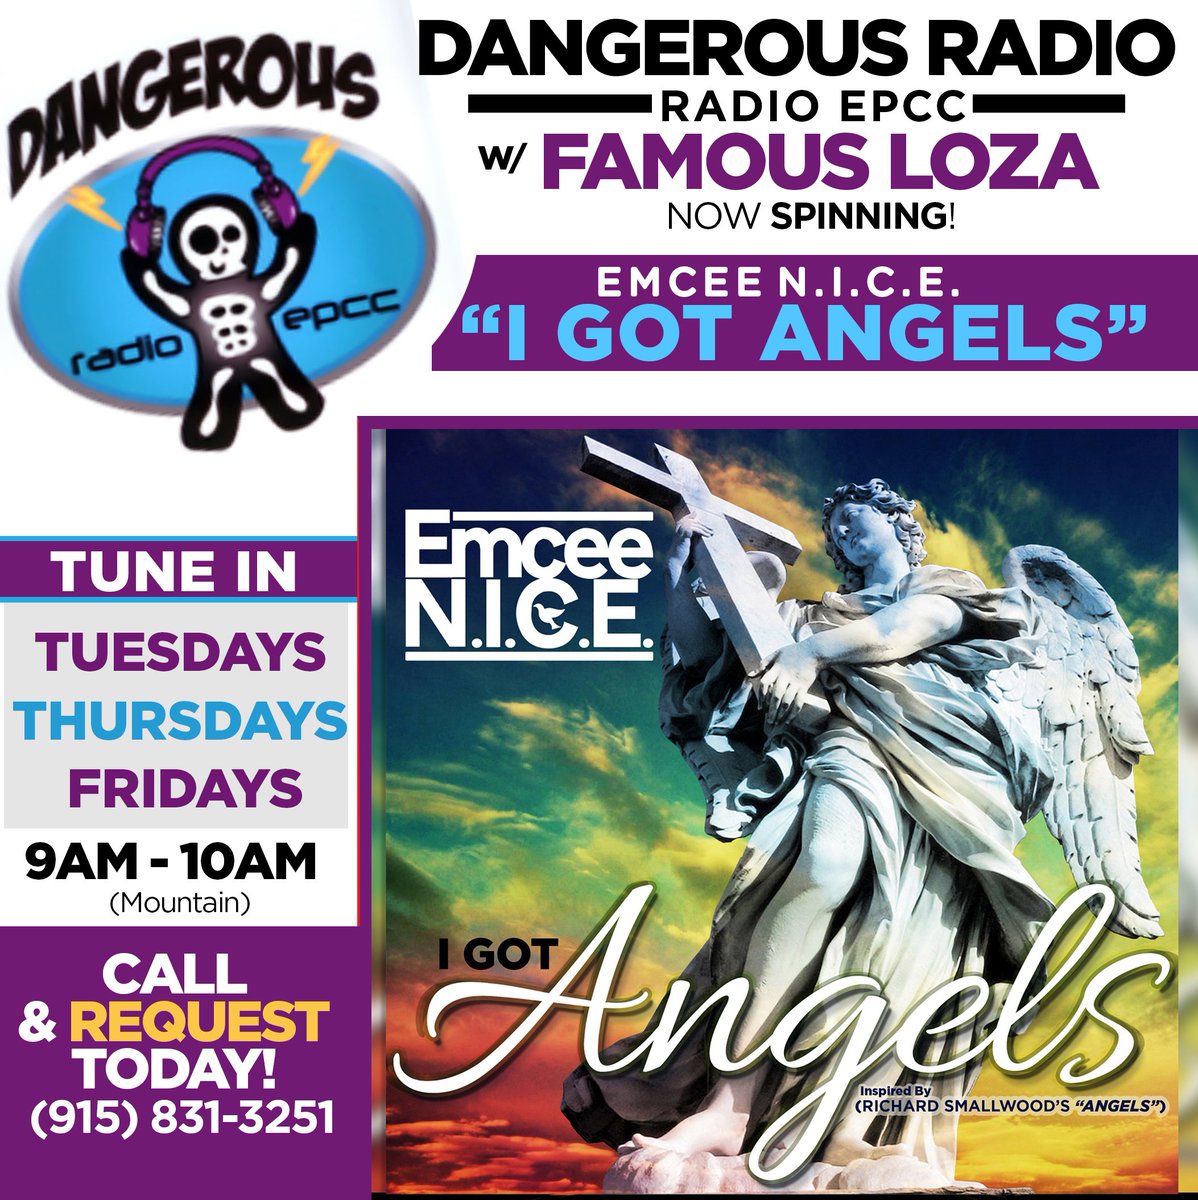 #iGotAngels added 2 #DangerousRadio w/@famousloza tune-in Tue., Thurs., & Fri. 9-10am epcc.streamon.fm Request it! 915.831.3251#GHH